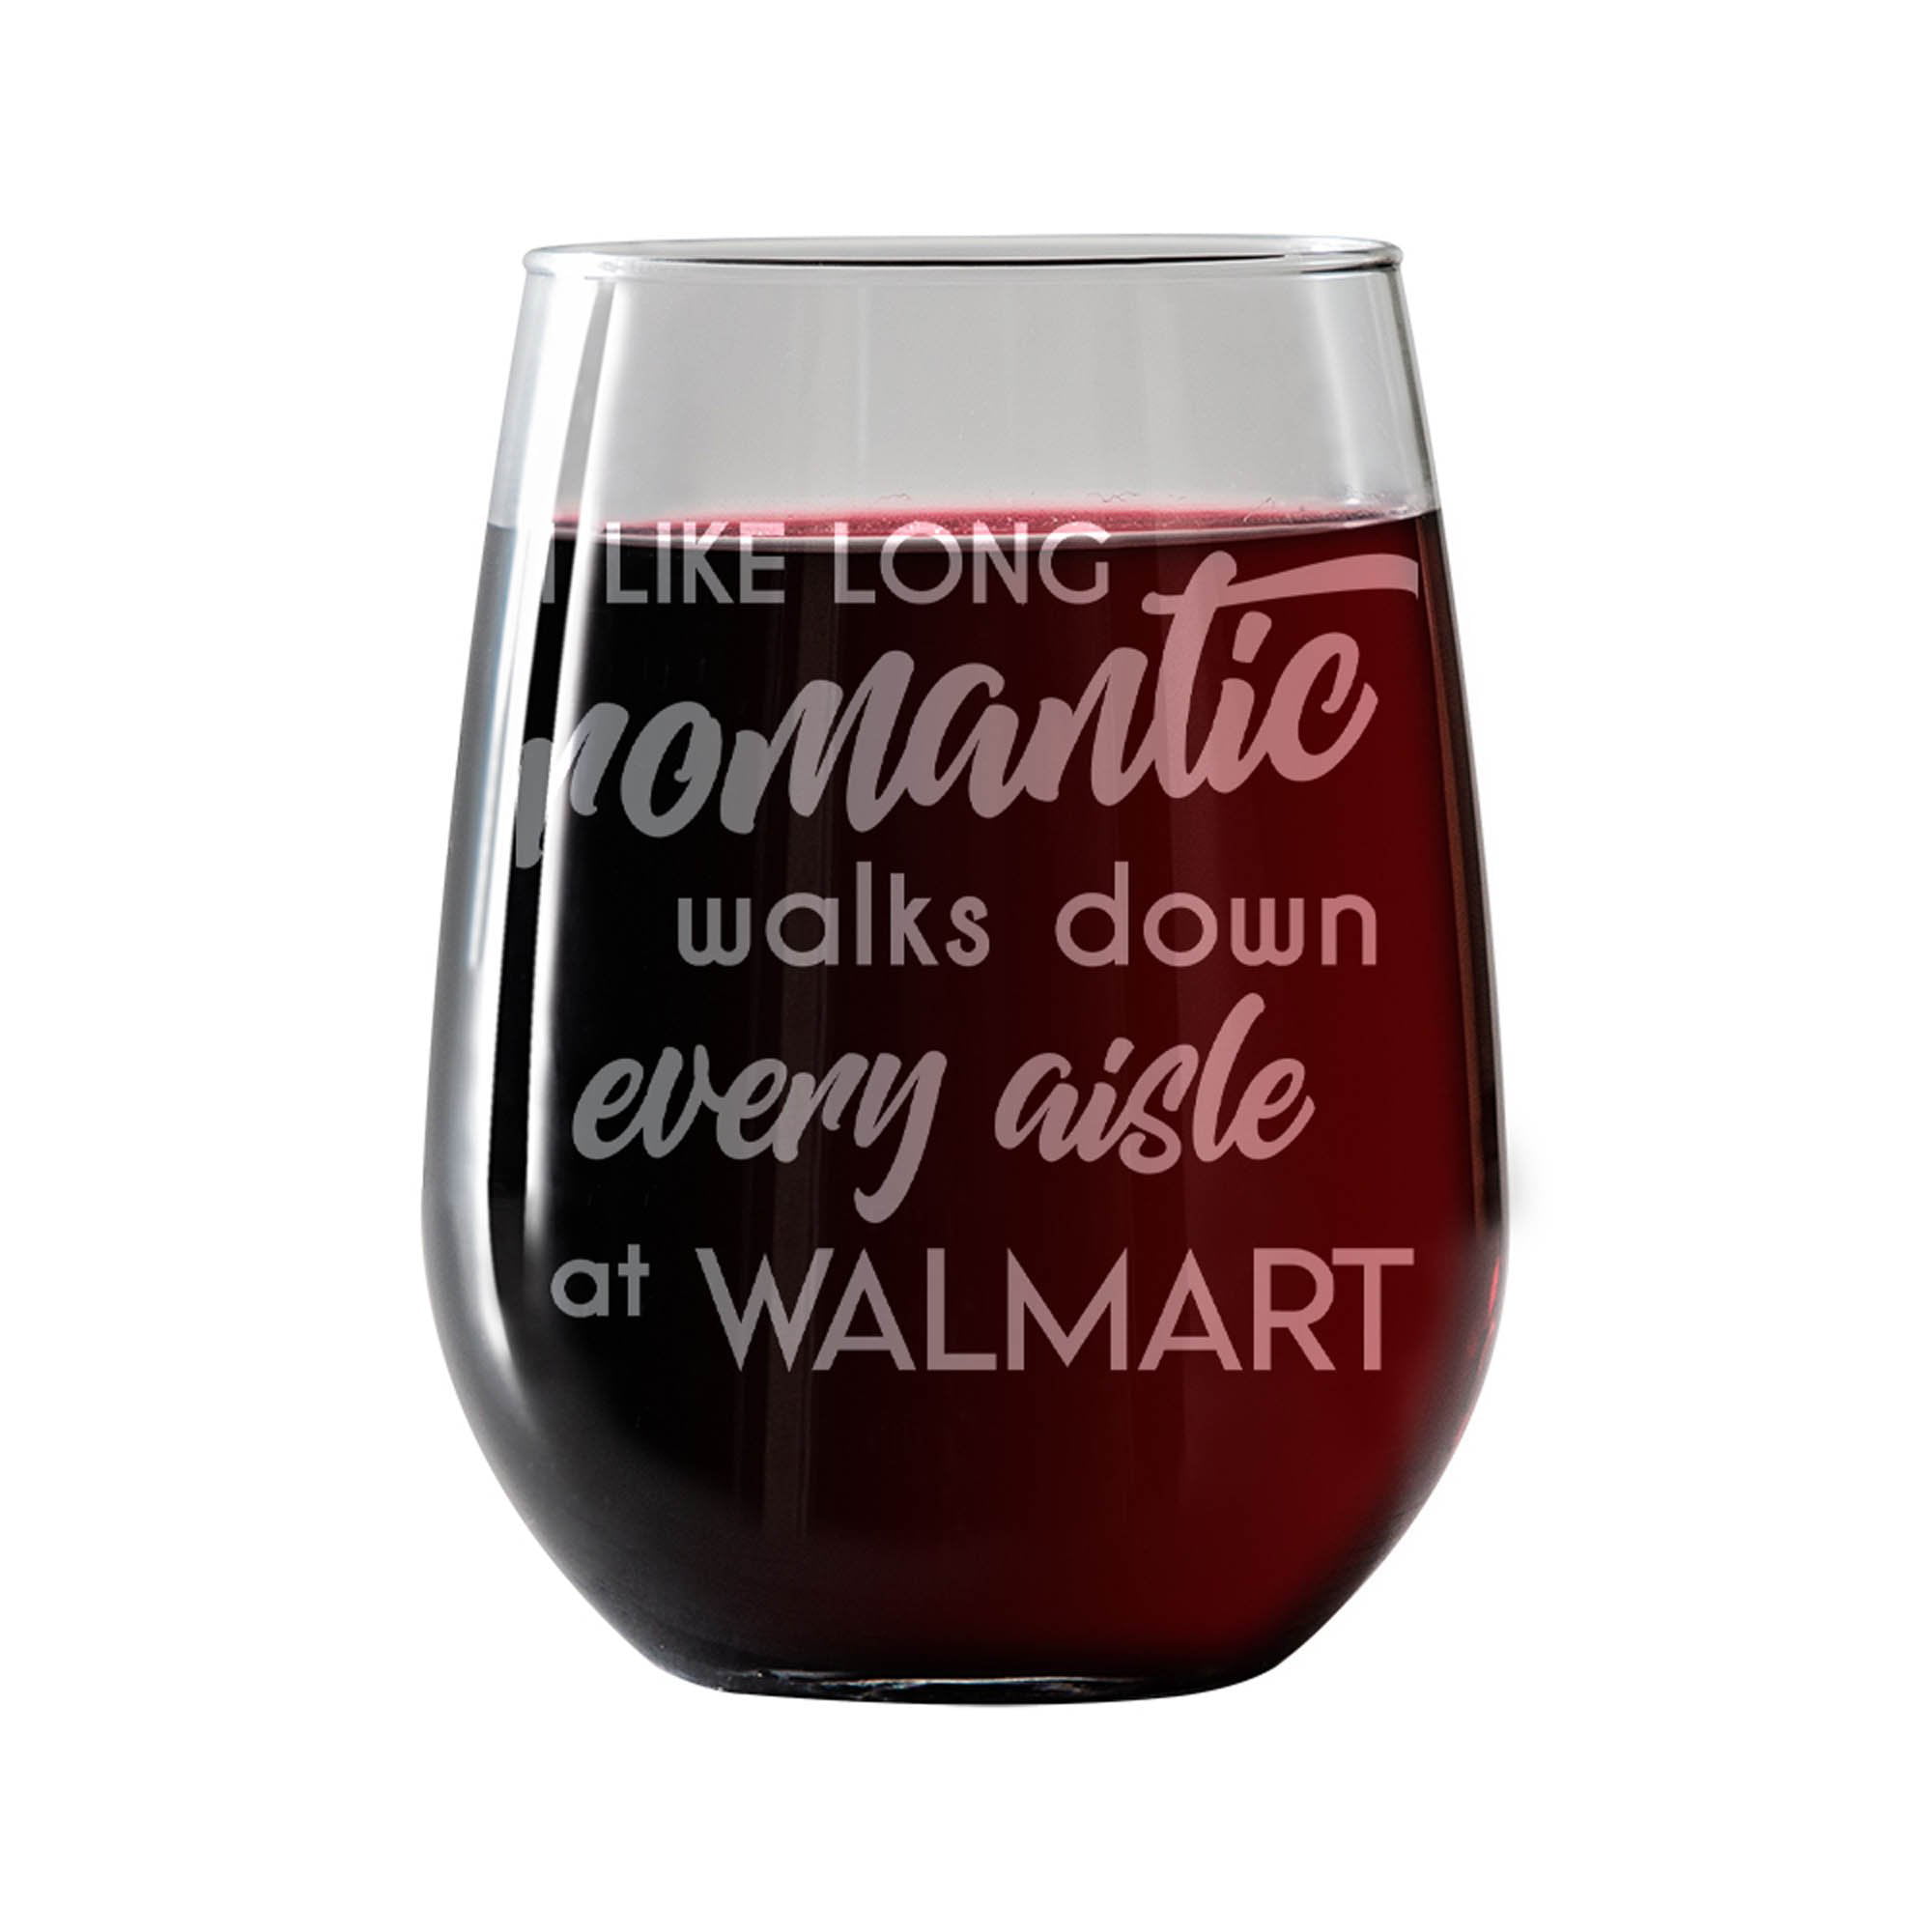 I Like Long Romantic walks at TargetStemless Wine Glass 17oz 